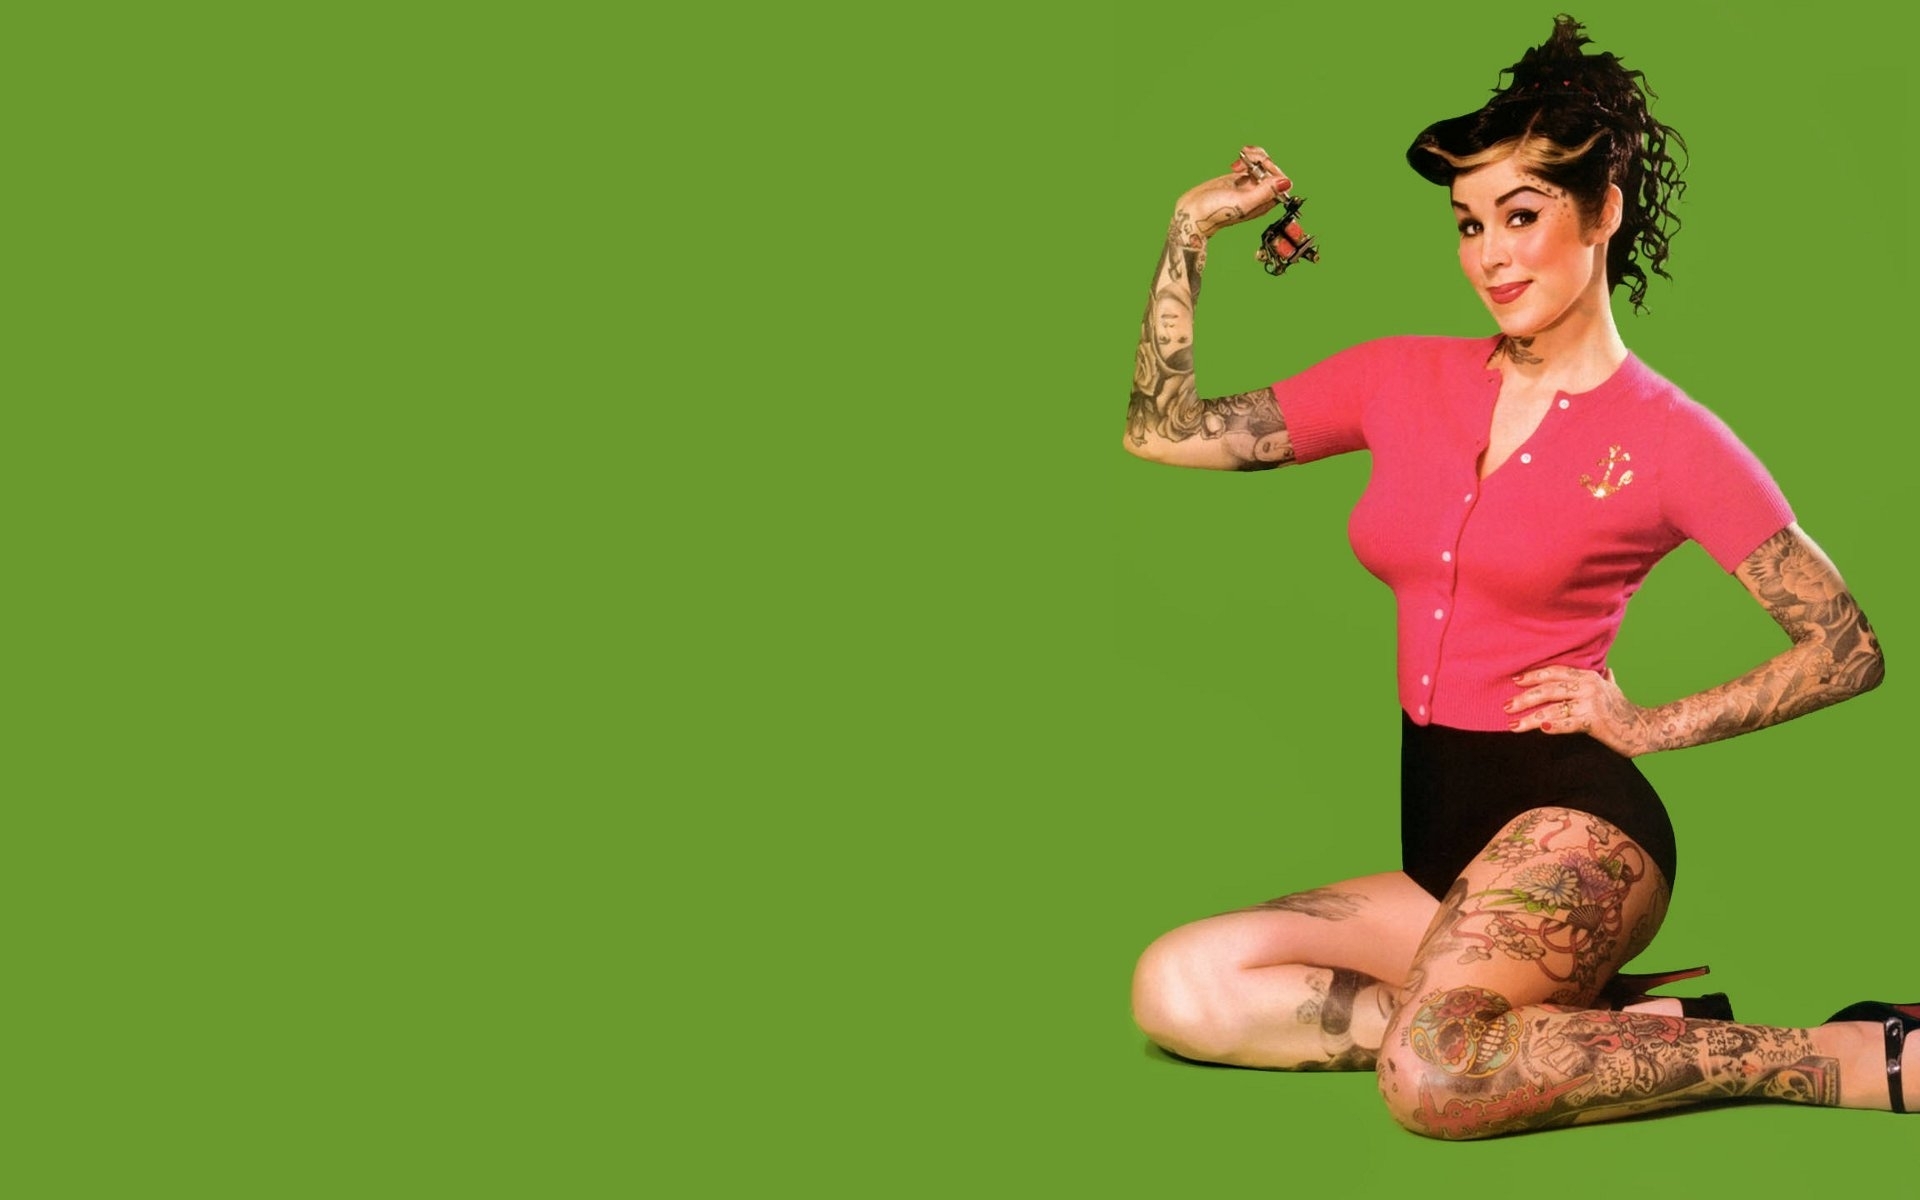 50 Amazing D Letter Tattoo Designs and Ideas  Body Art Guru